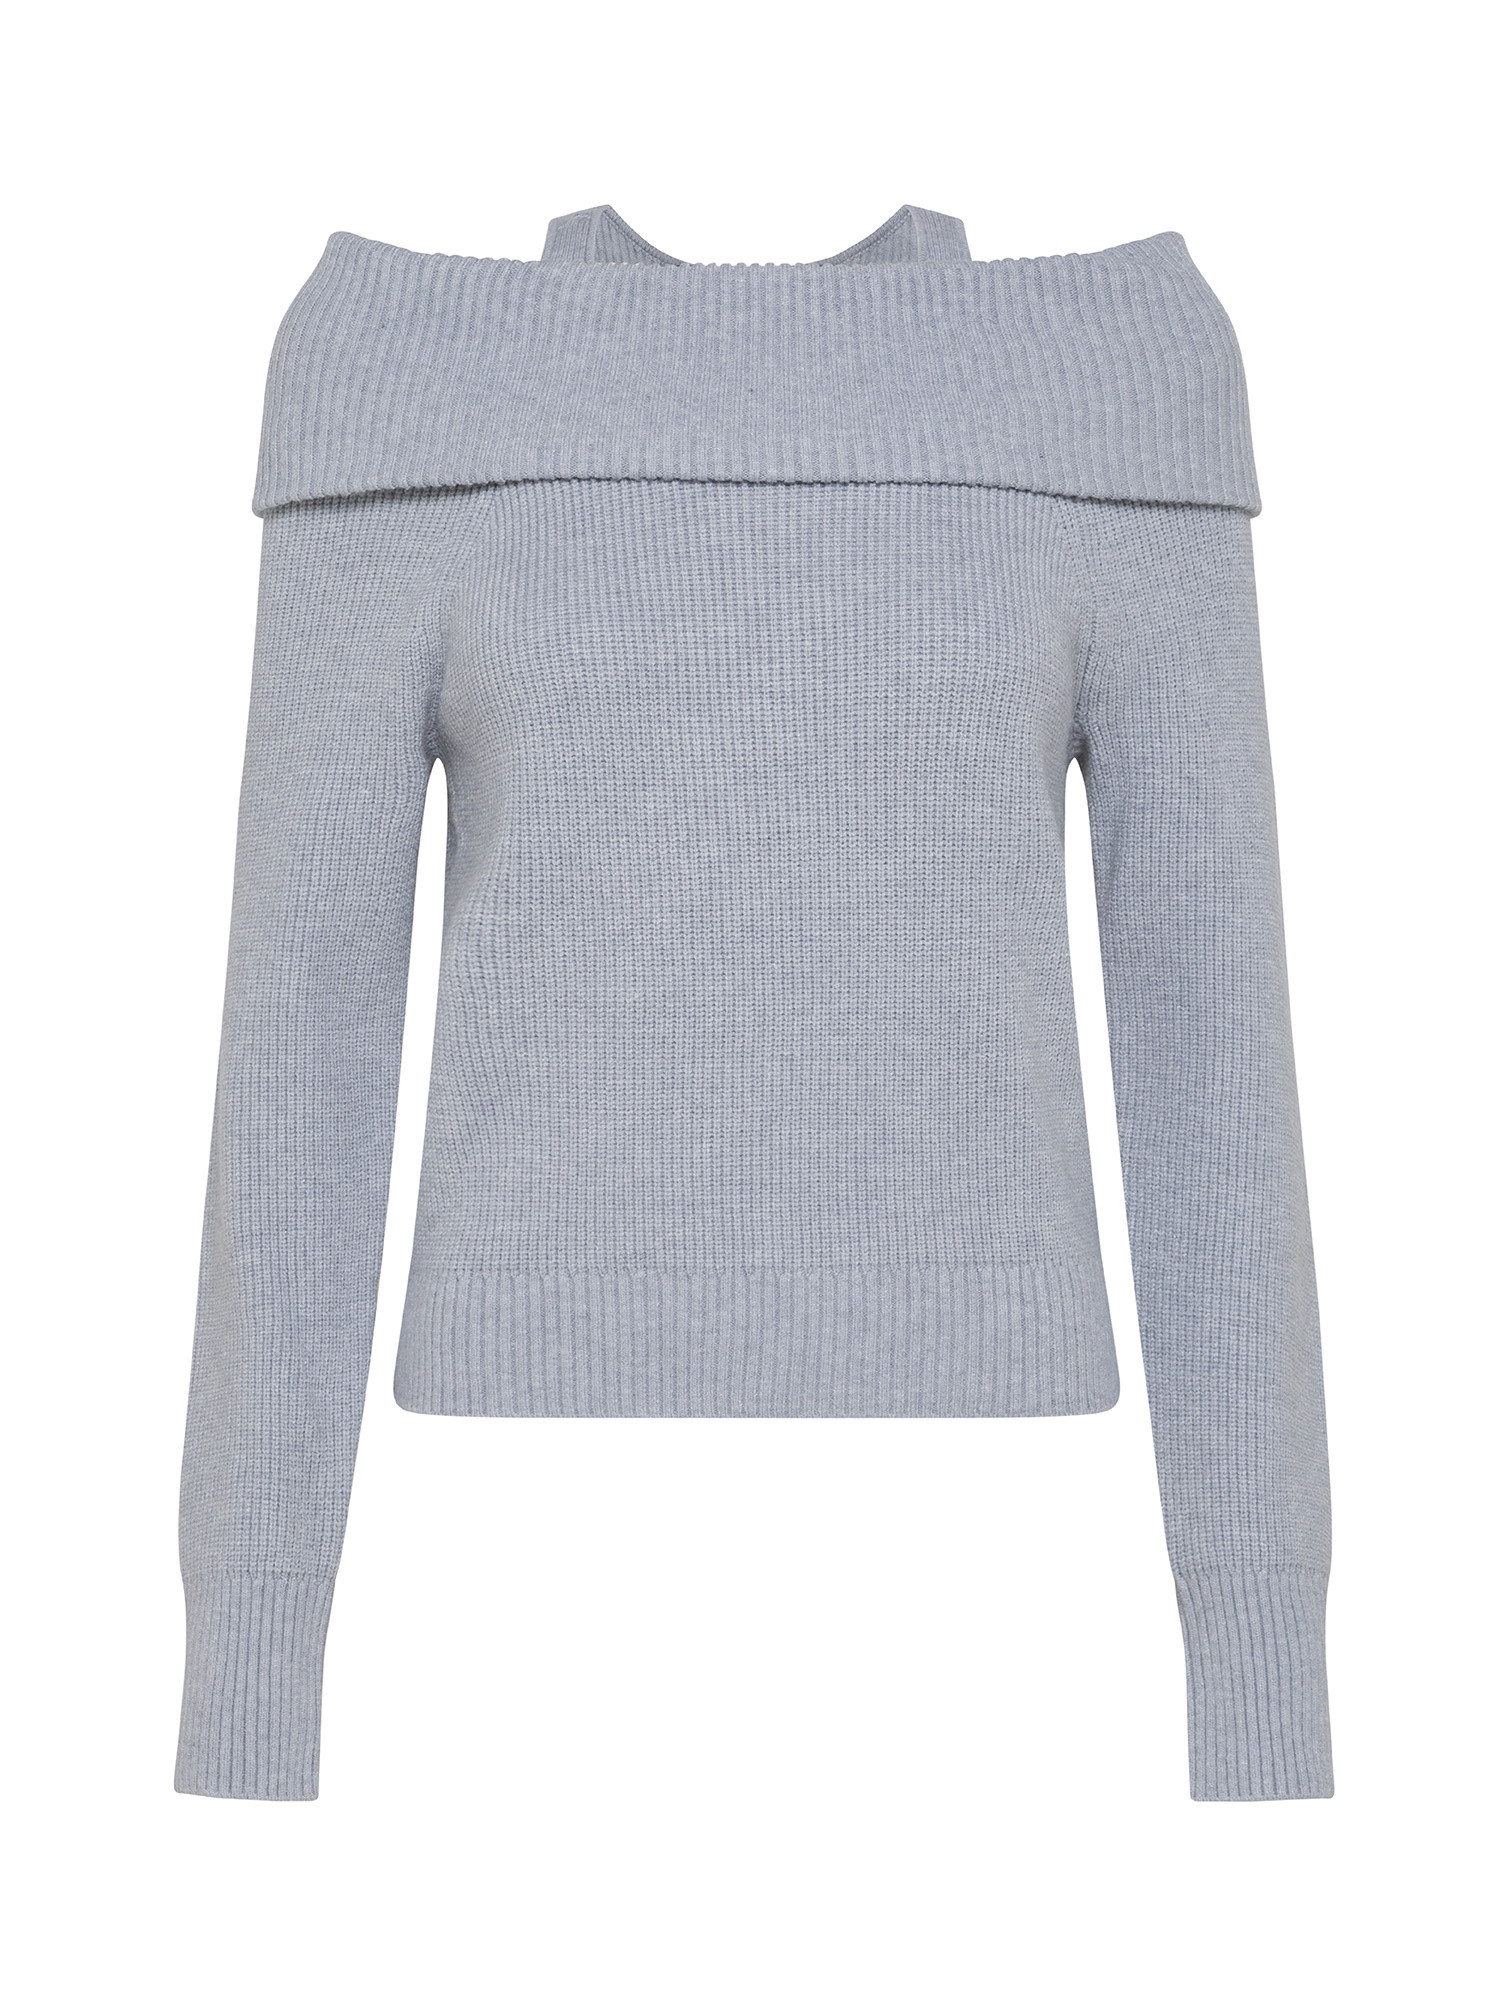 DKNY - Shoulder off sweater, White, large image number 0